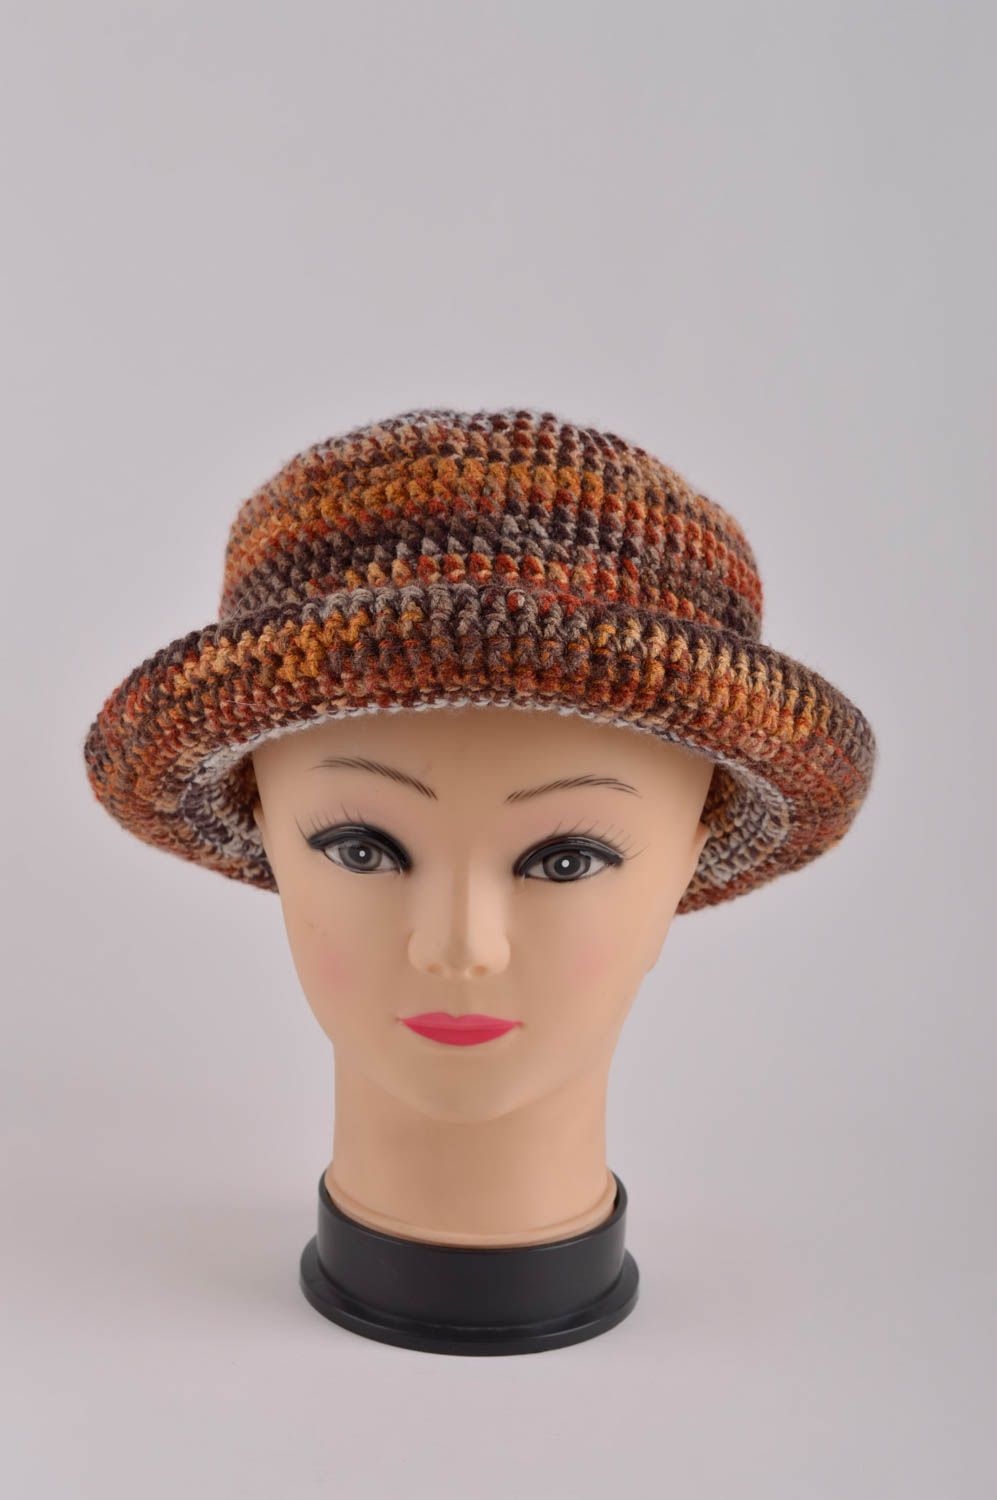 Handmade ladies hat crochet hat designer accessories fashion hats gifts for her photo 3